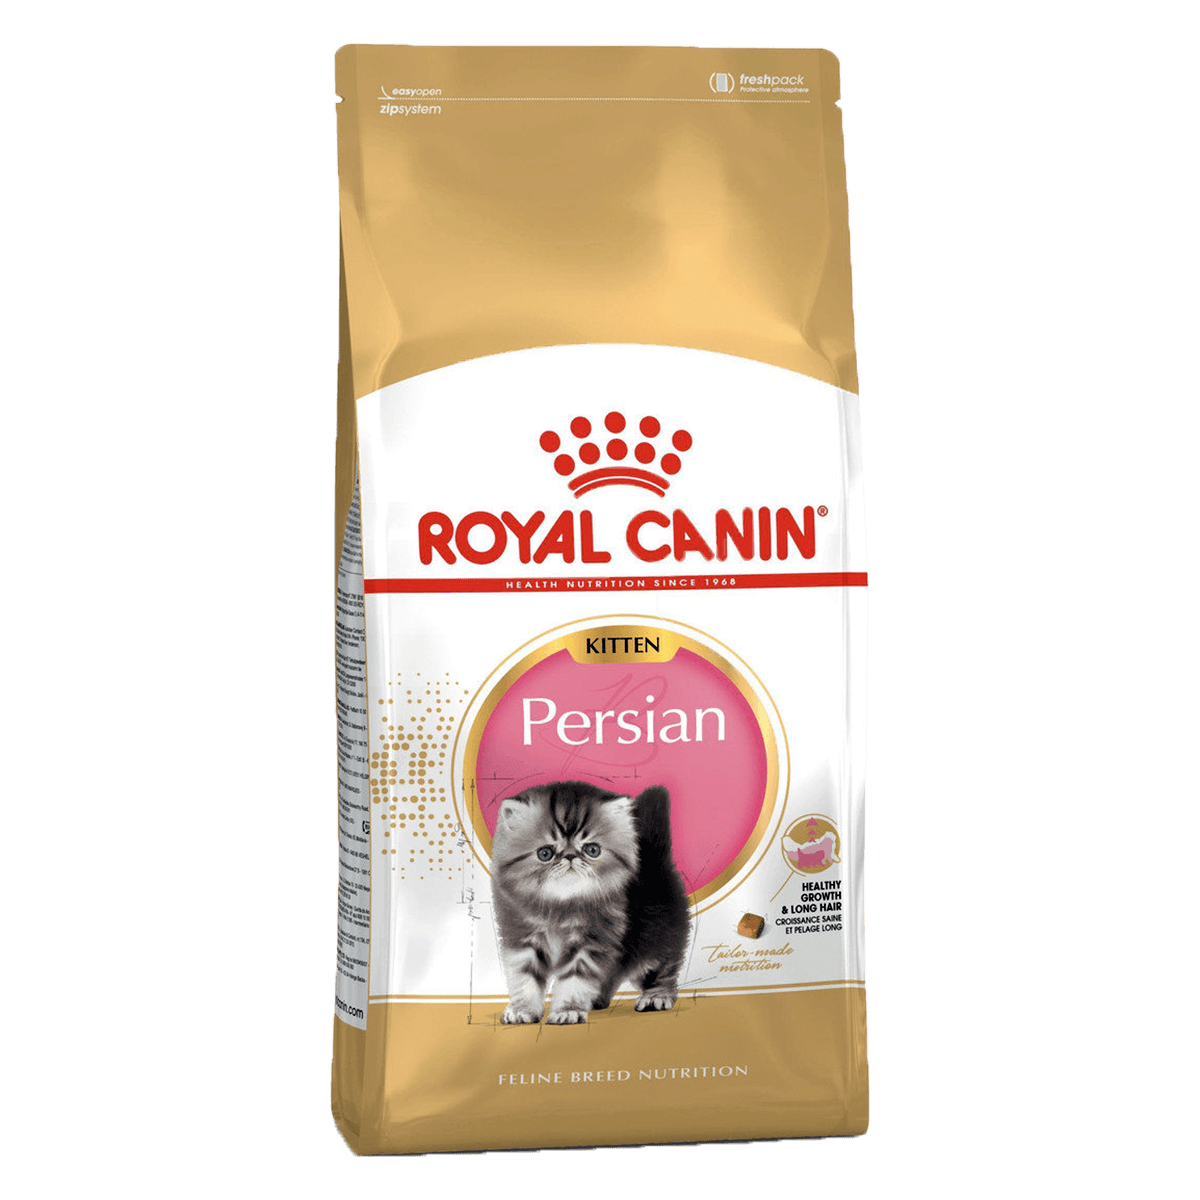 Royal Canin Persian Kitten, 2 кг - корм Роял Канин для персидских котят